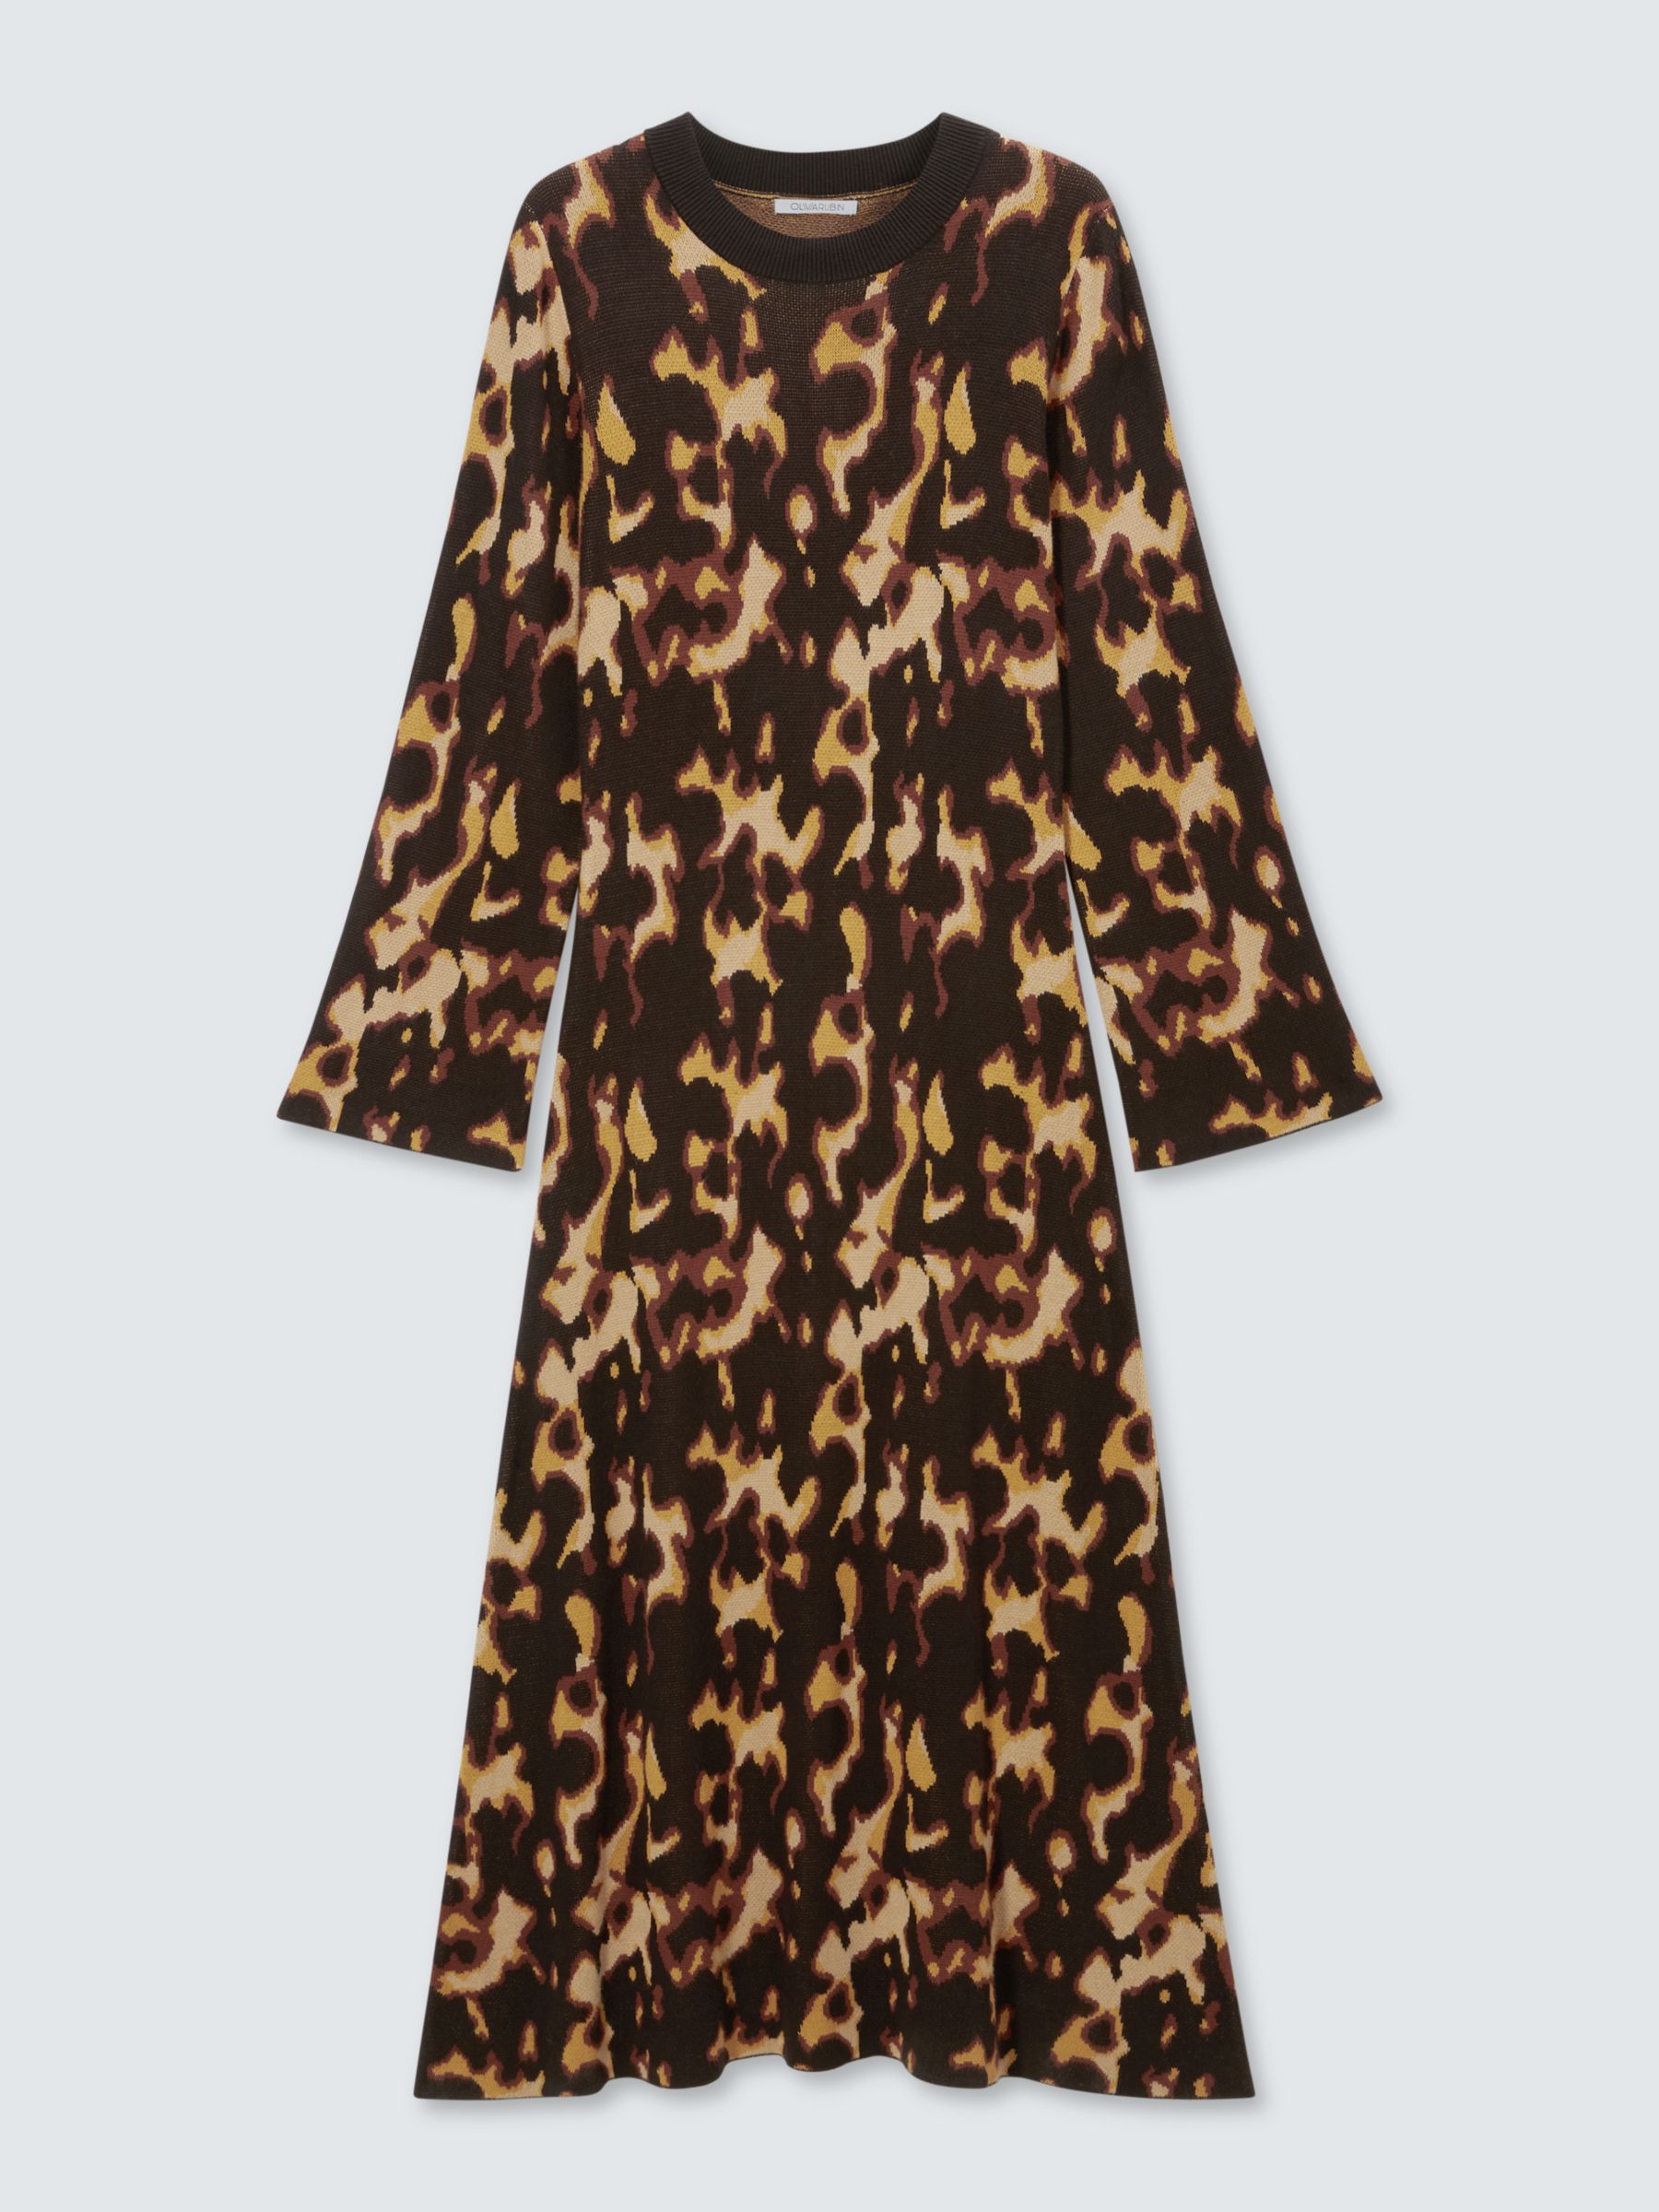 Olivia Rubin Kyra Tortoiseshell Knitted Maxi Dress, Brown £240.00